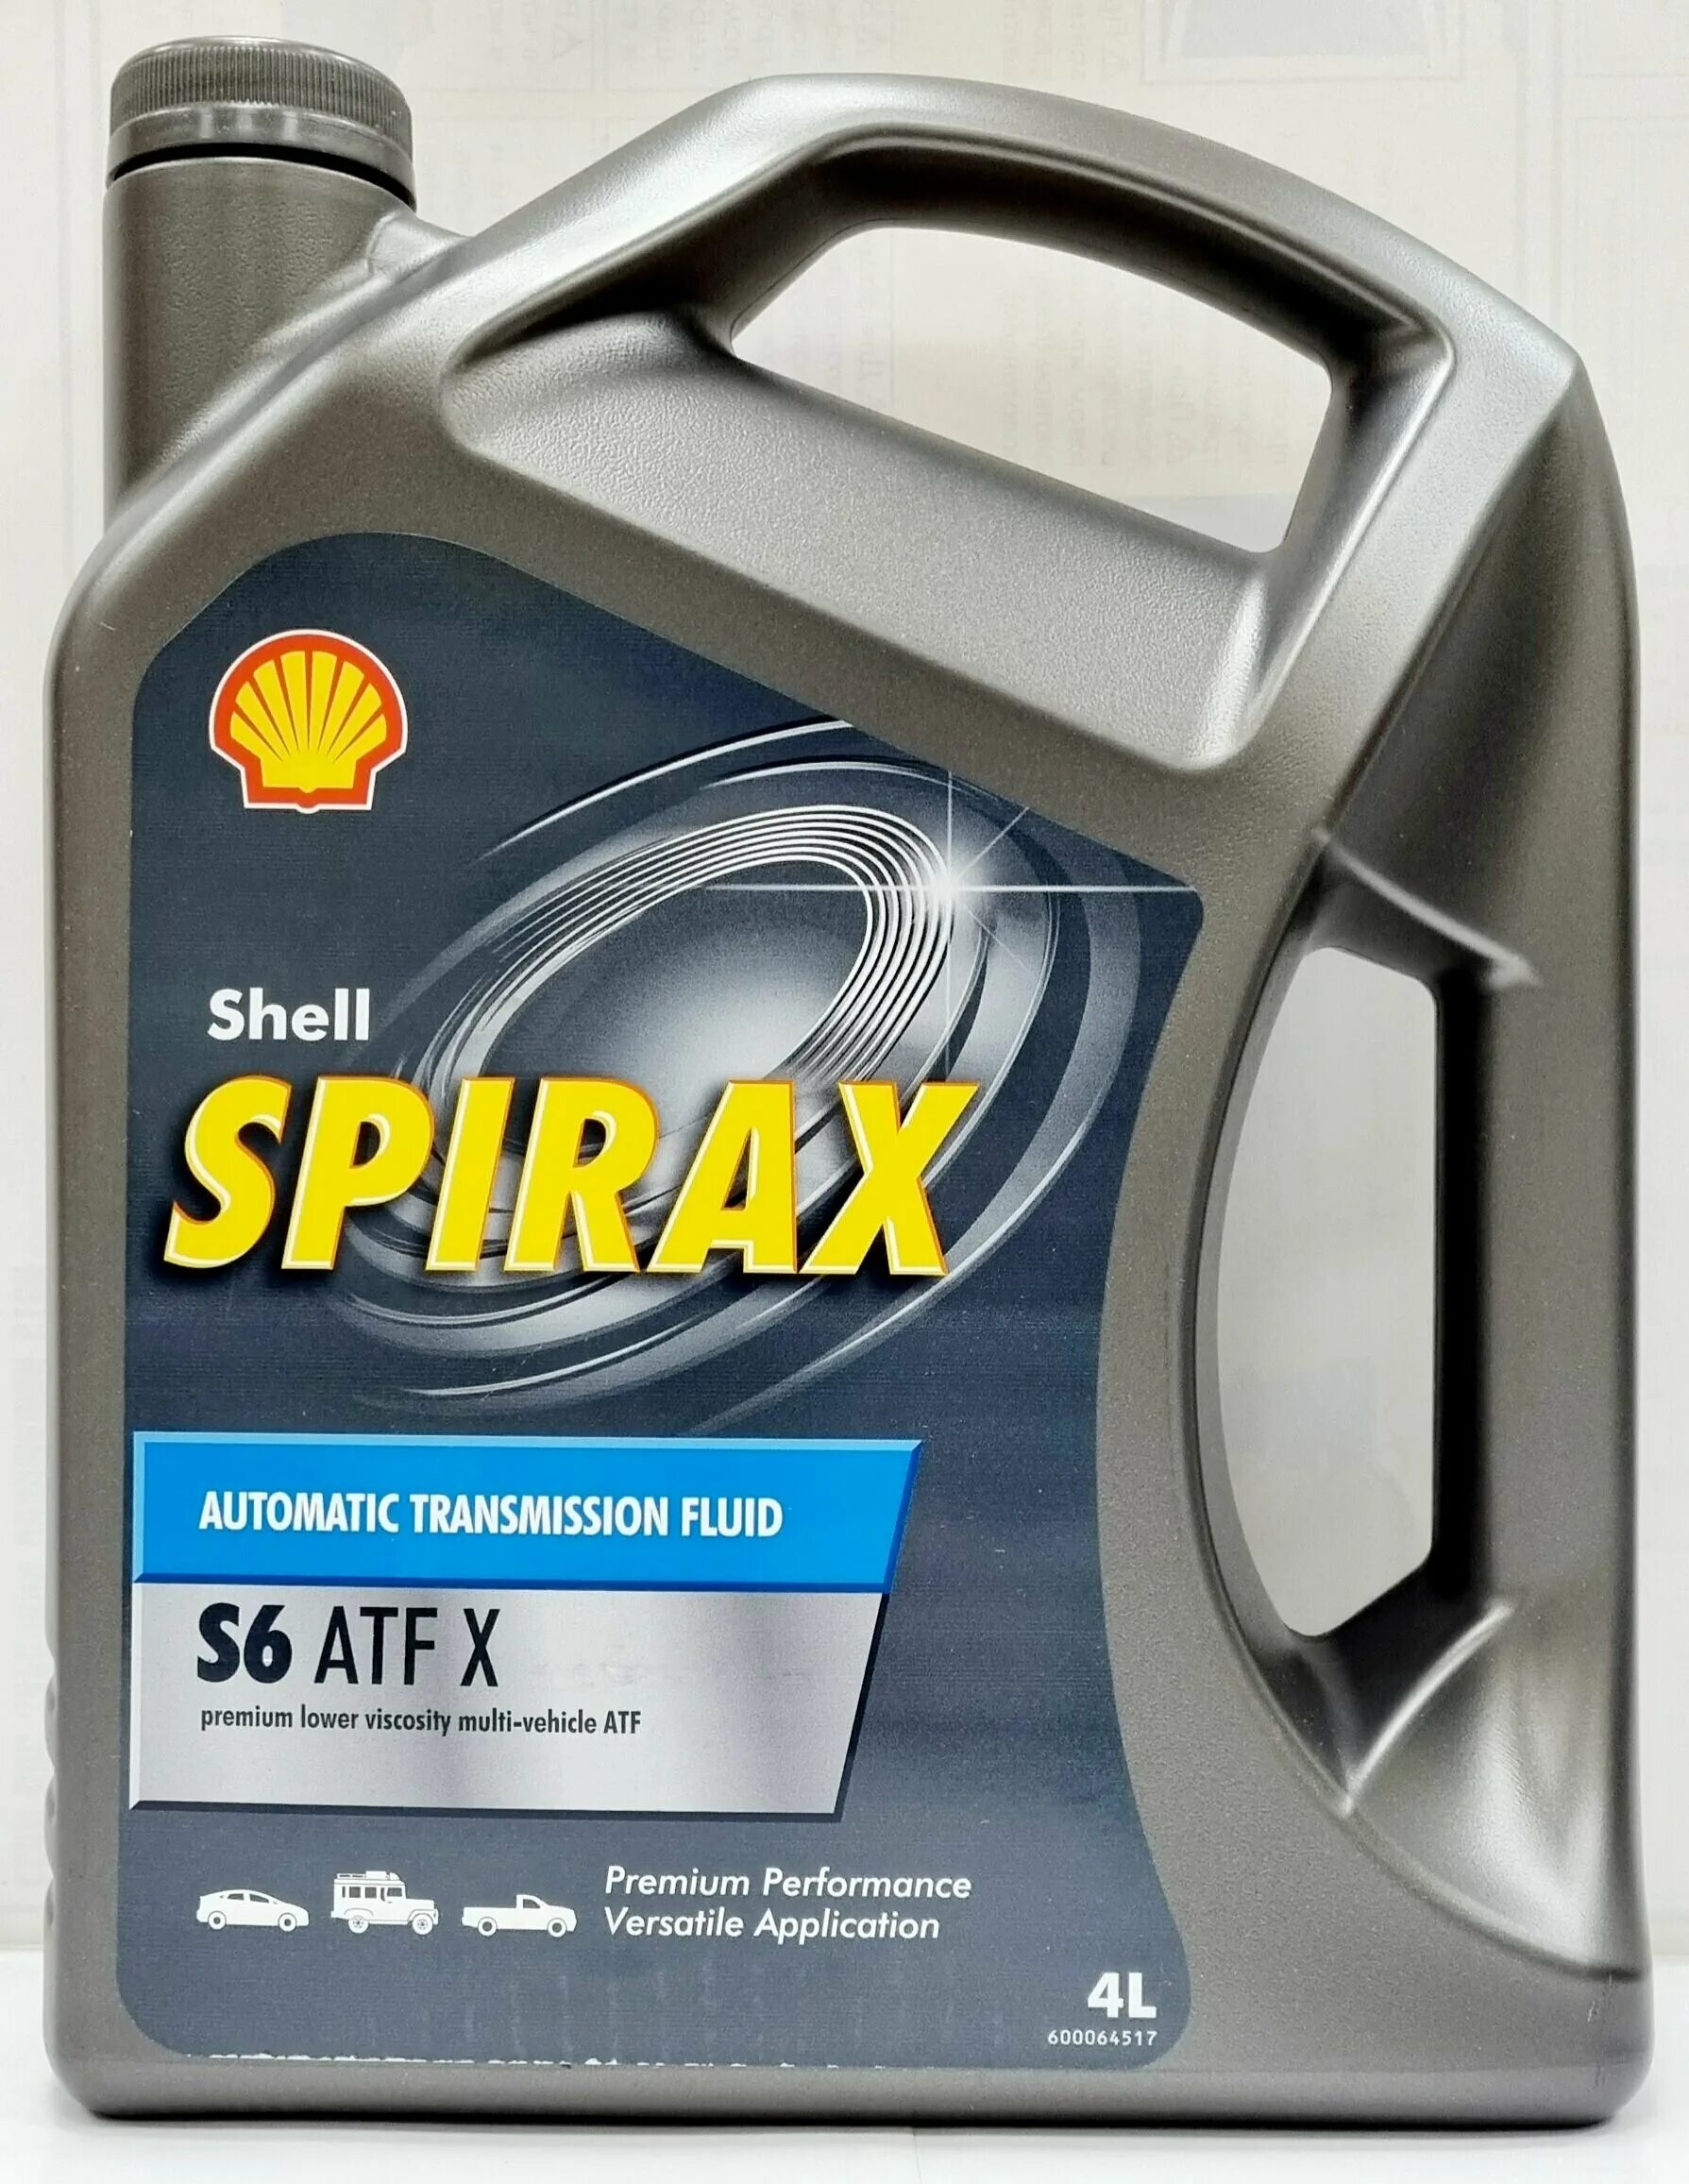 Shell spirax atf x. Shell Spirax s6 ATF. Shell Spirax s6 ATF X 4л. S6 ATF X Shell. Масло трансмиссионное Shell Spirax s6 ATF X артикул.